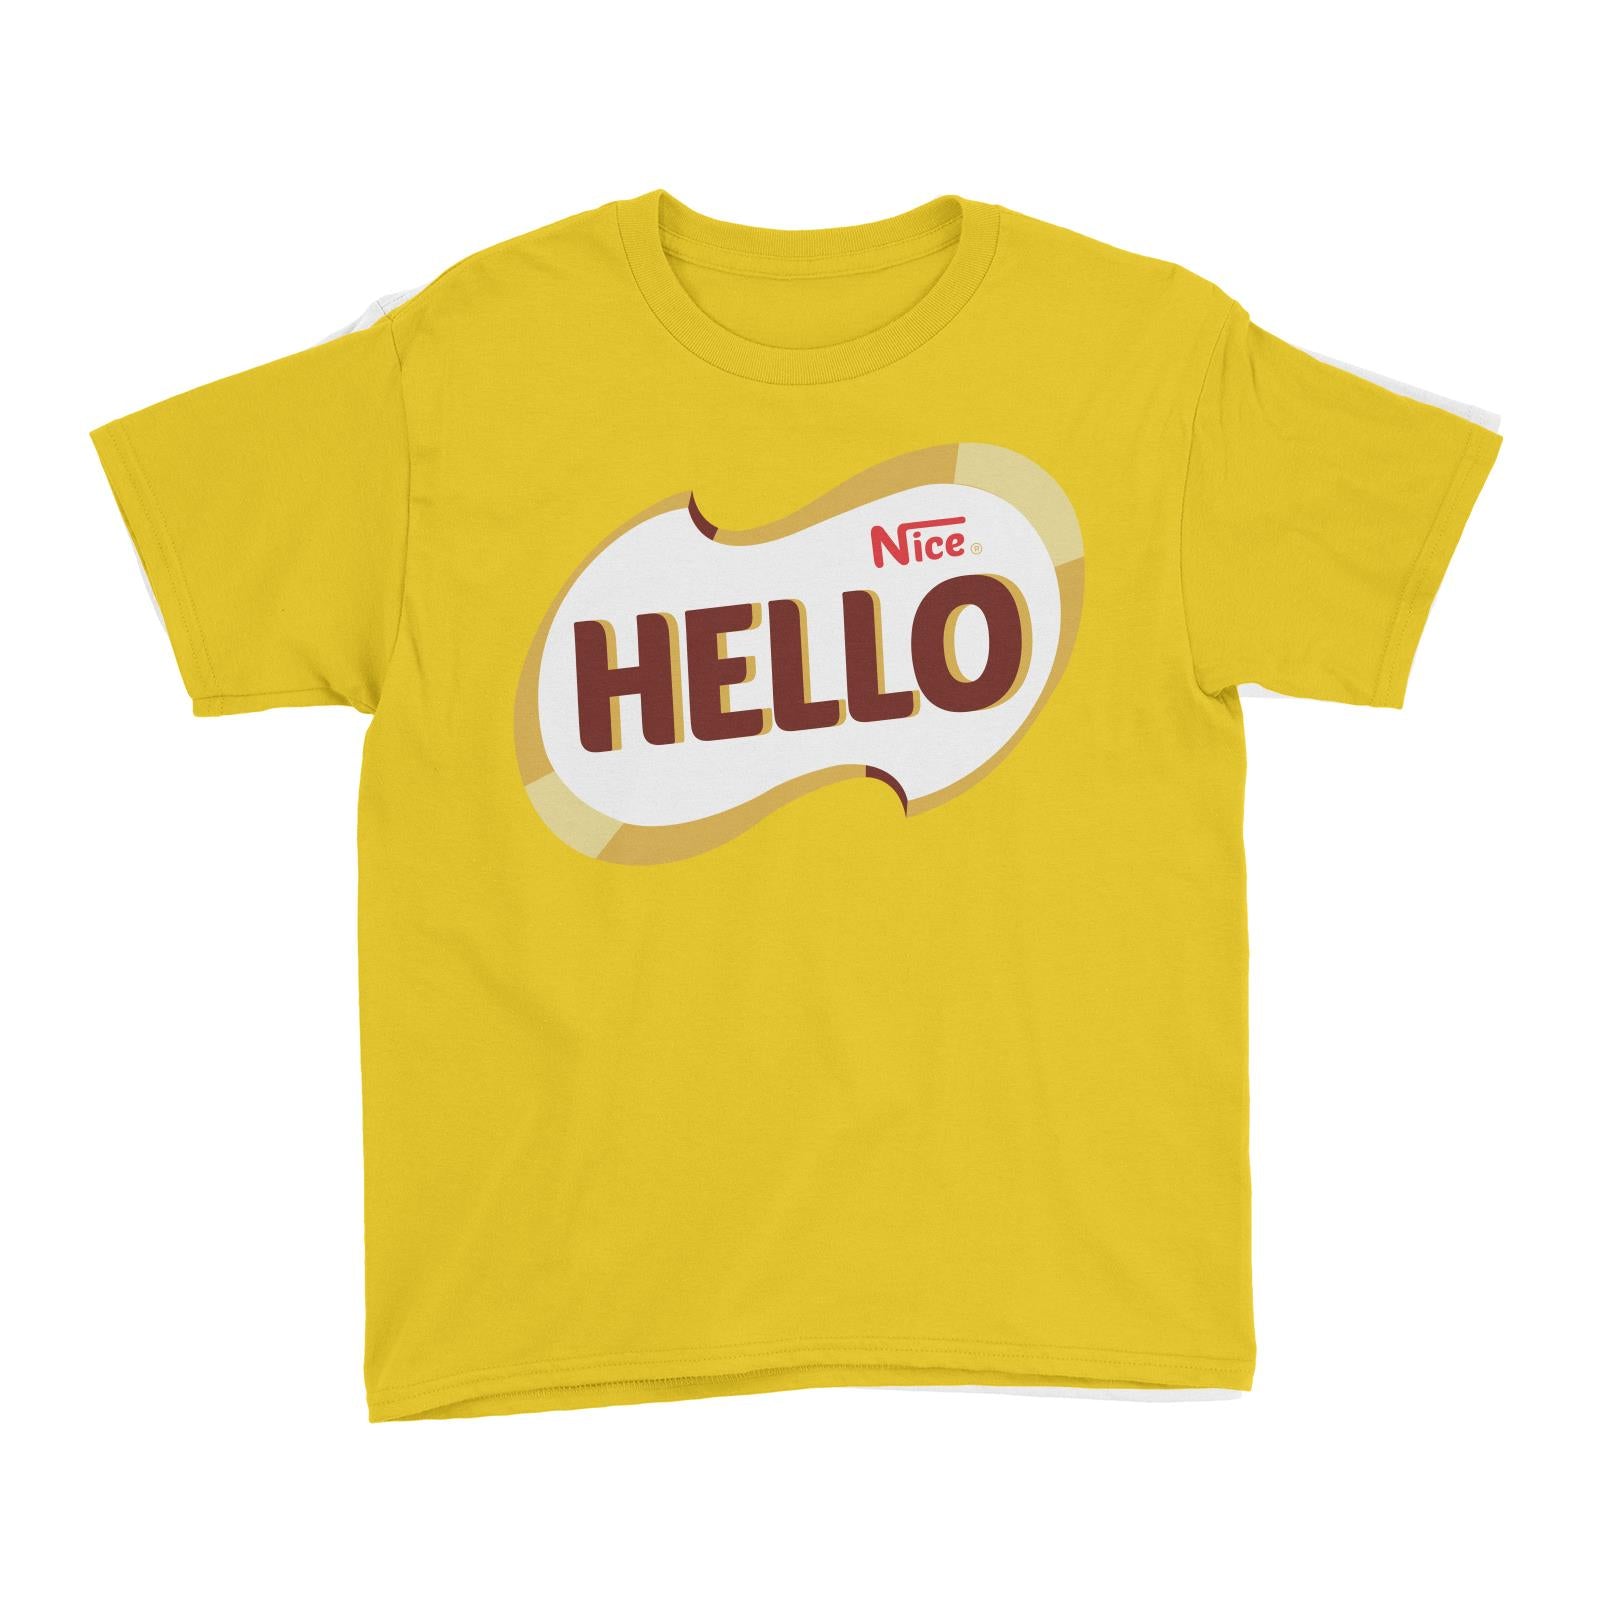 Slang Statement Hello Nice Kid's T-Shirt